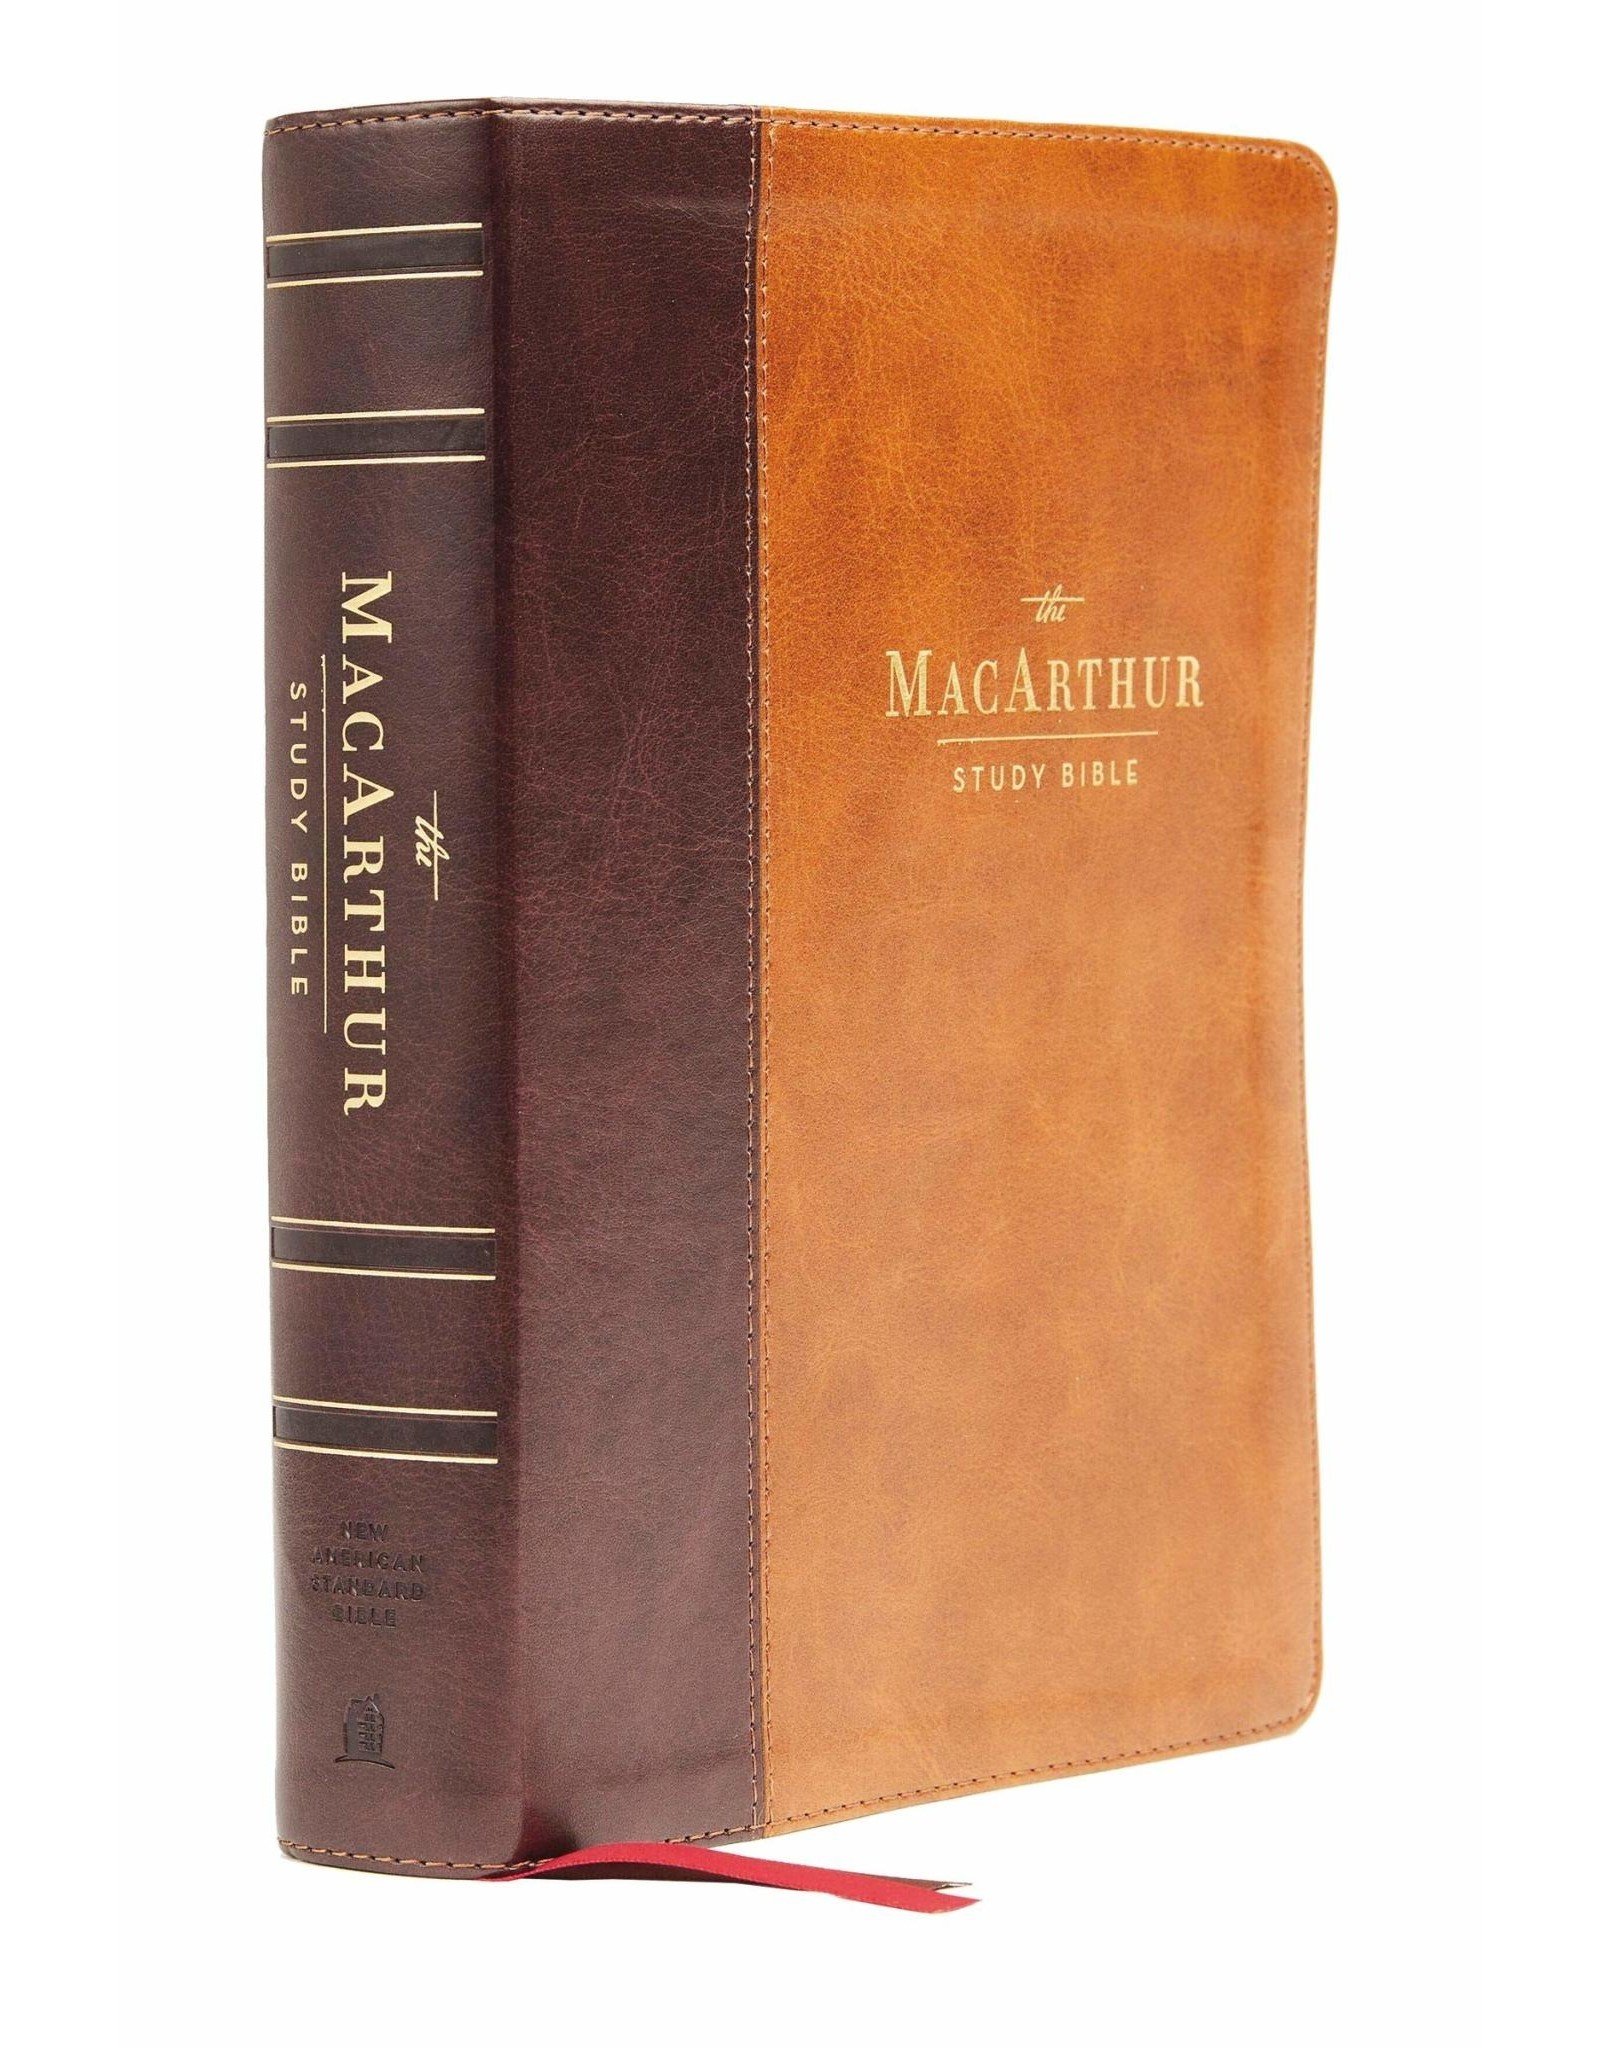 Harper Collins / Thomas Nelson / Zondervan NASB MSB MacArthur Study Bible (2nd Edition, Leathersoft, Brown)